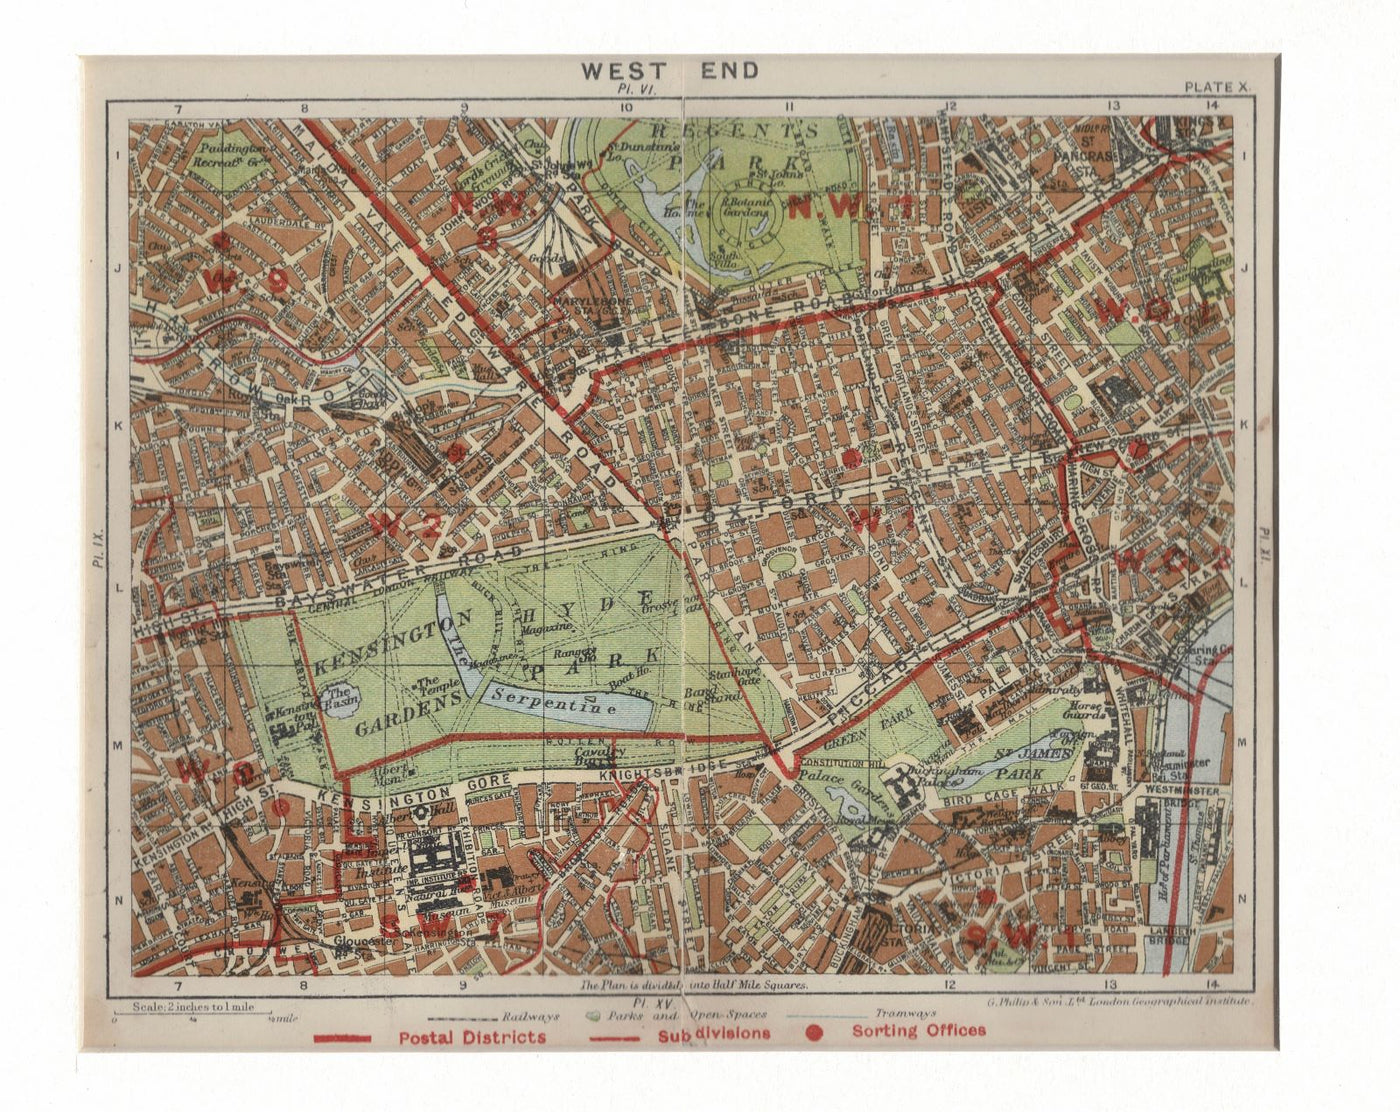 West End of London antique map published 1920